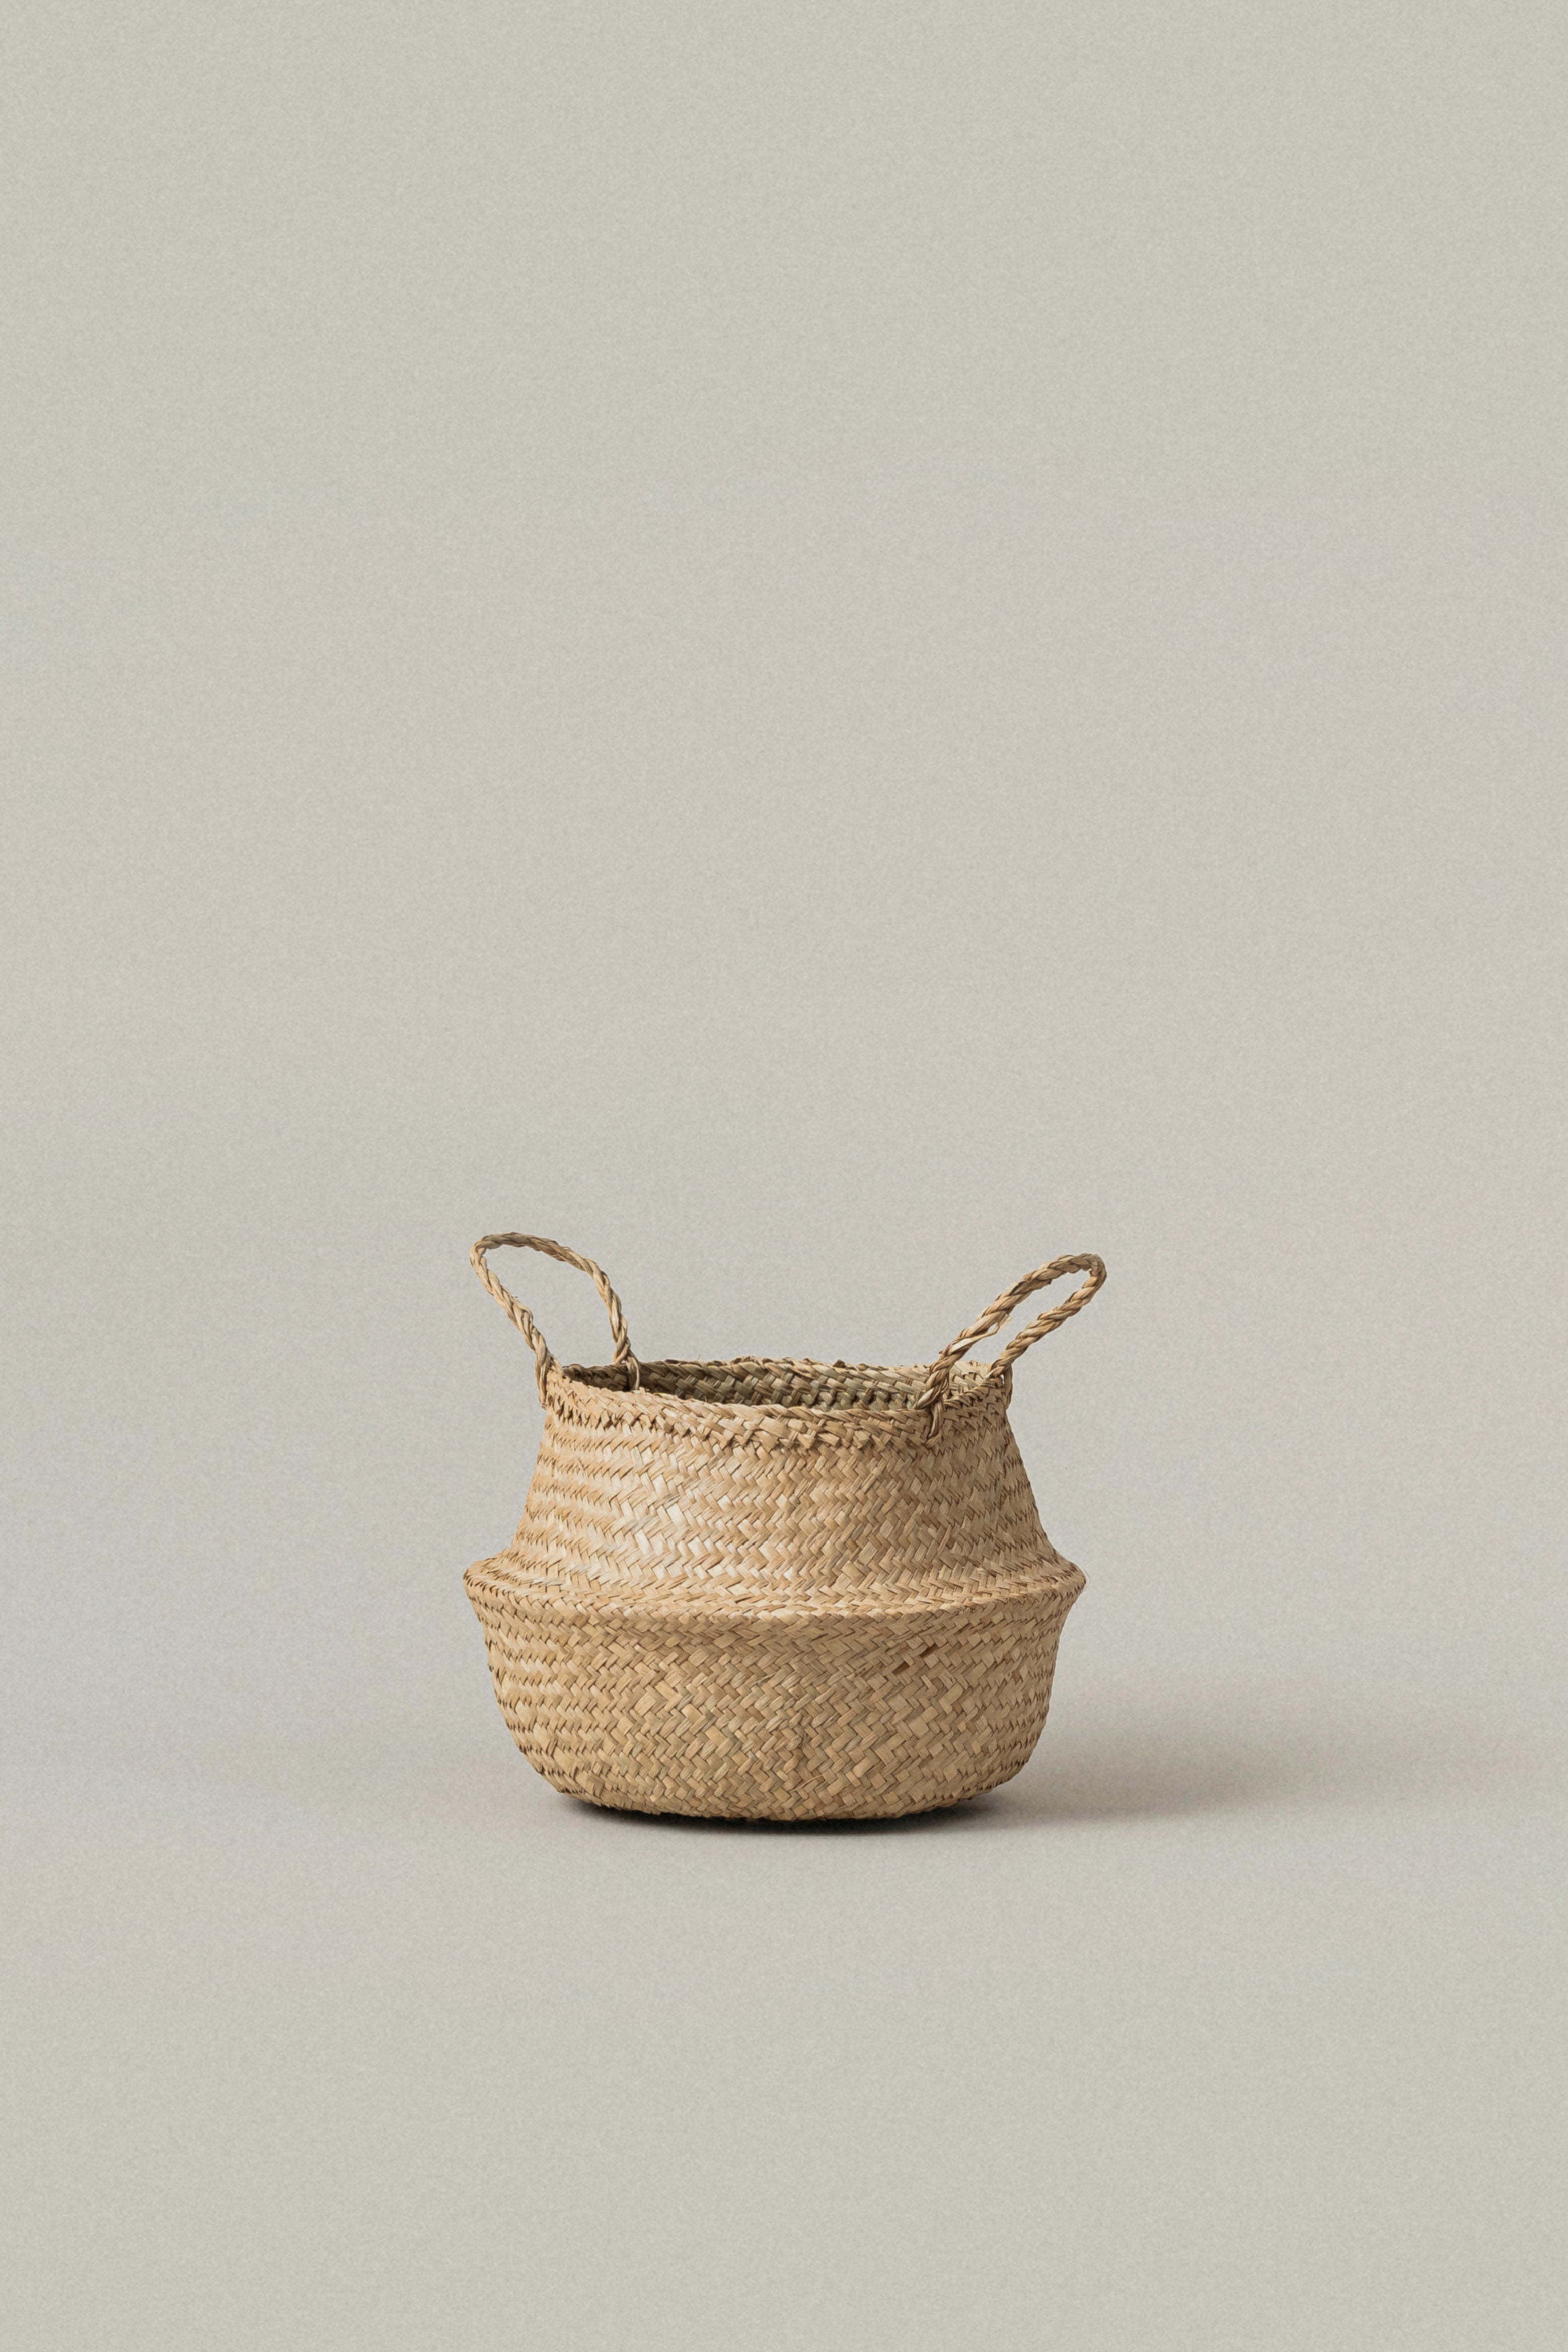 Small Kiau Foldable Seagrass Basket - Small Kiau Foldable Seagrass Basket